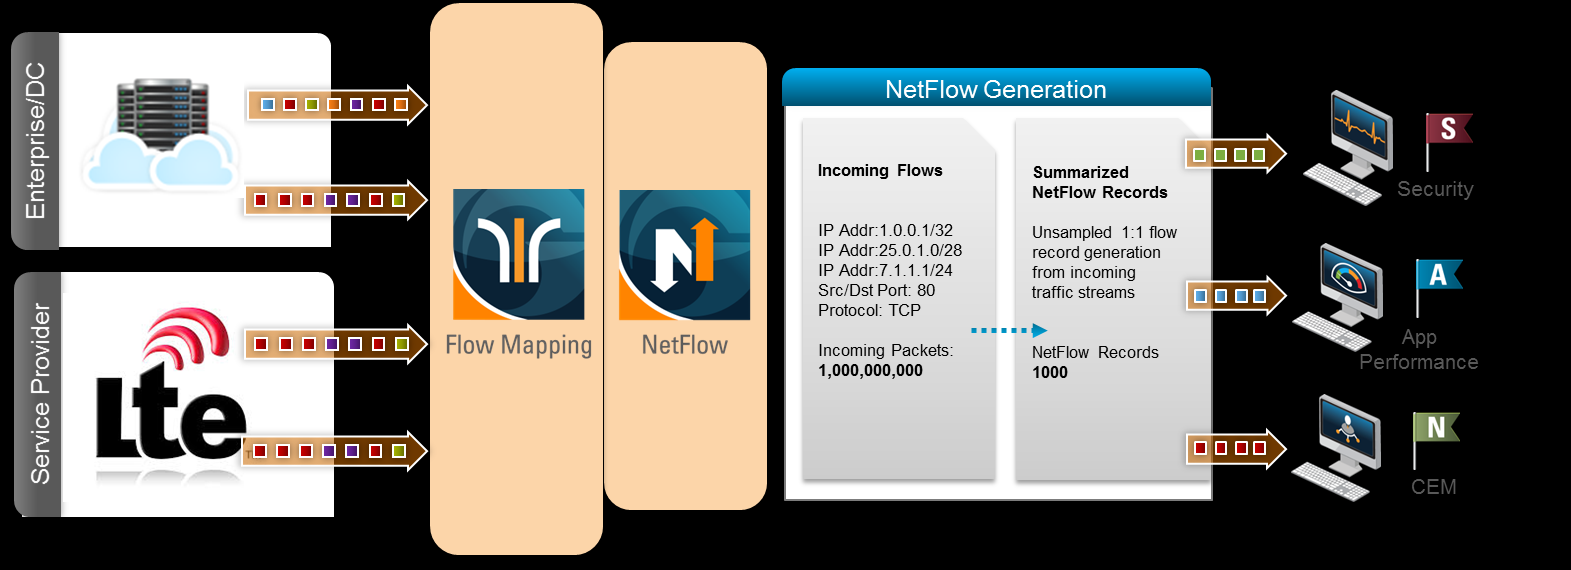 GigaSMART Netflow Generation 1:1 UNSAMPLED의